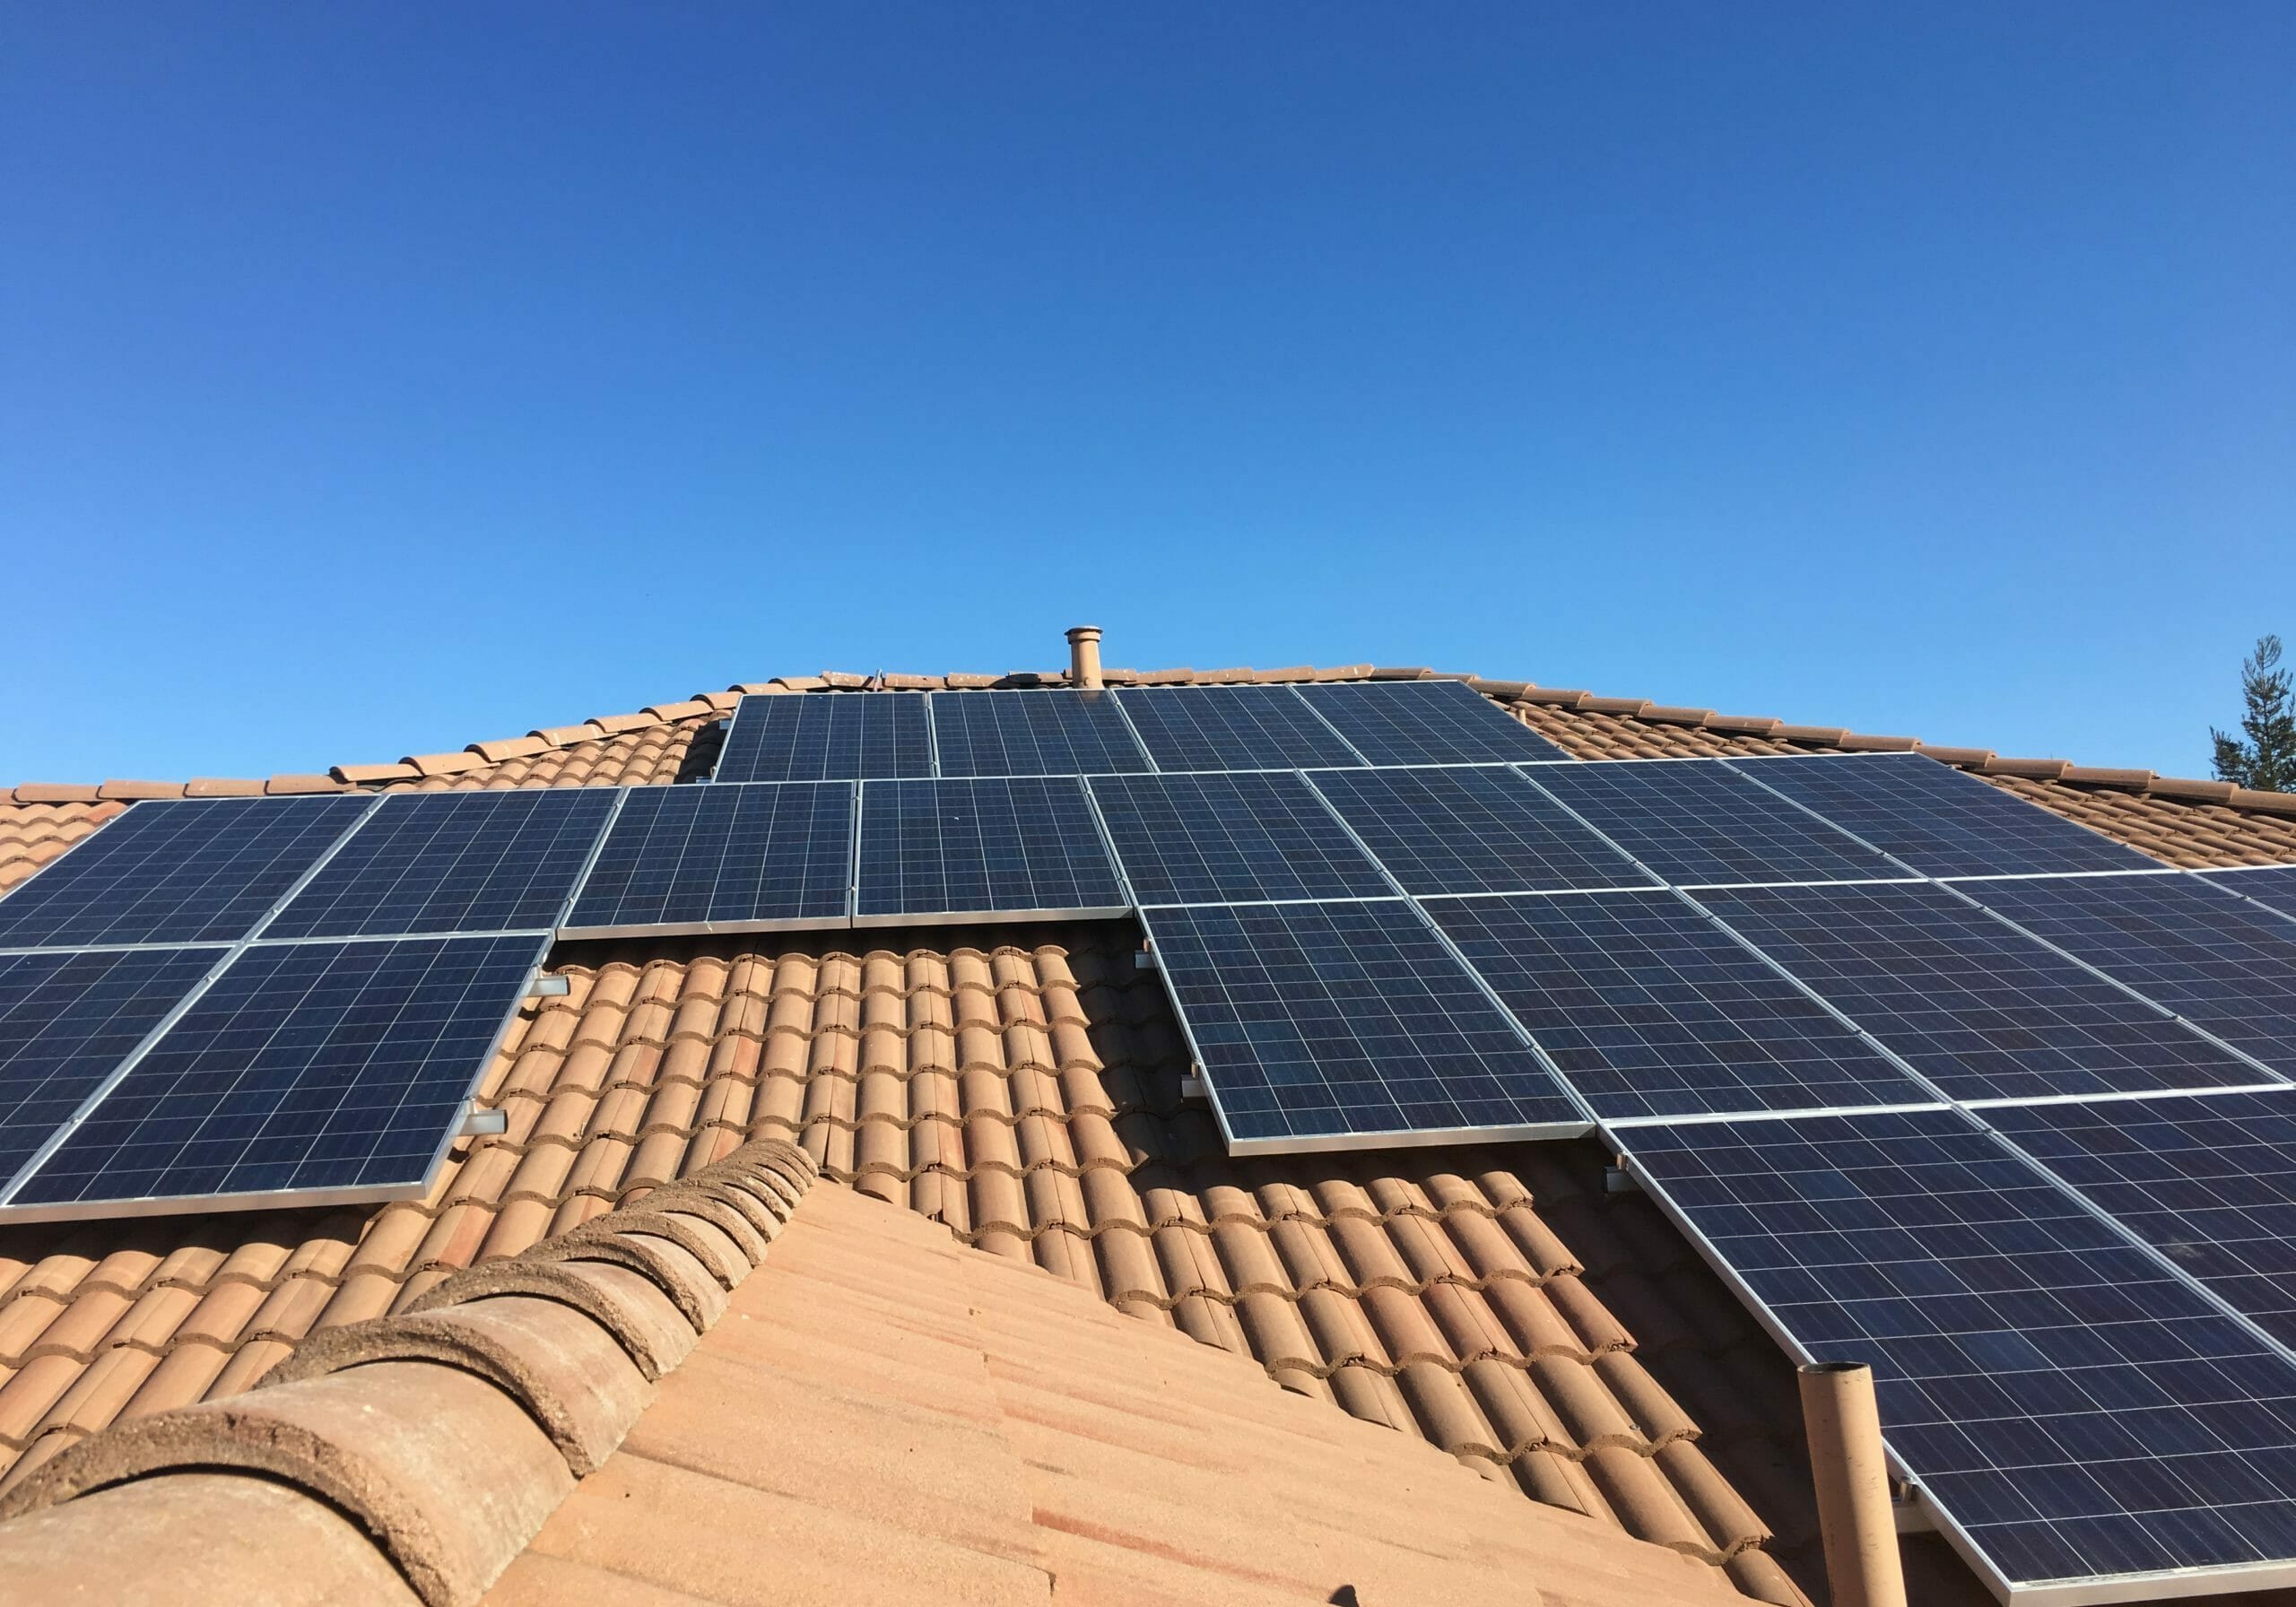 22 solar panels on roof